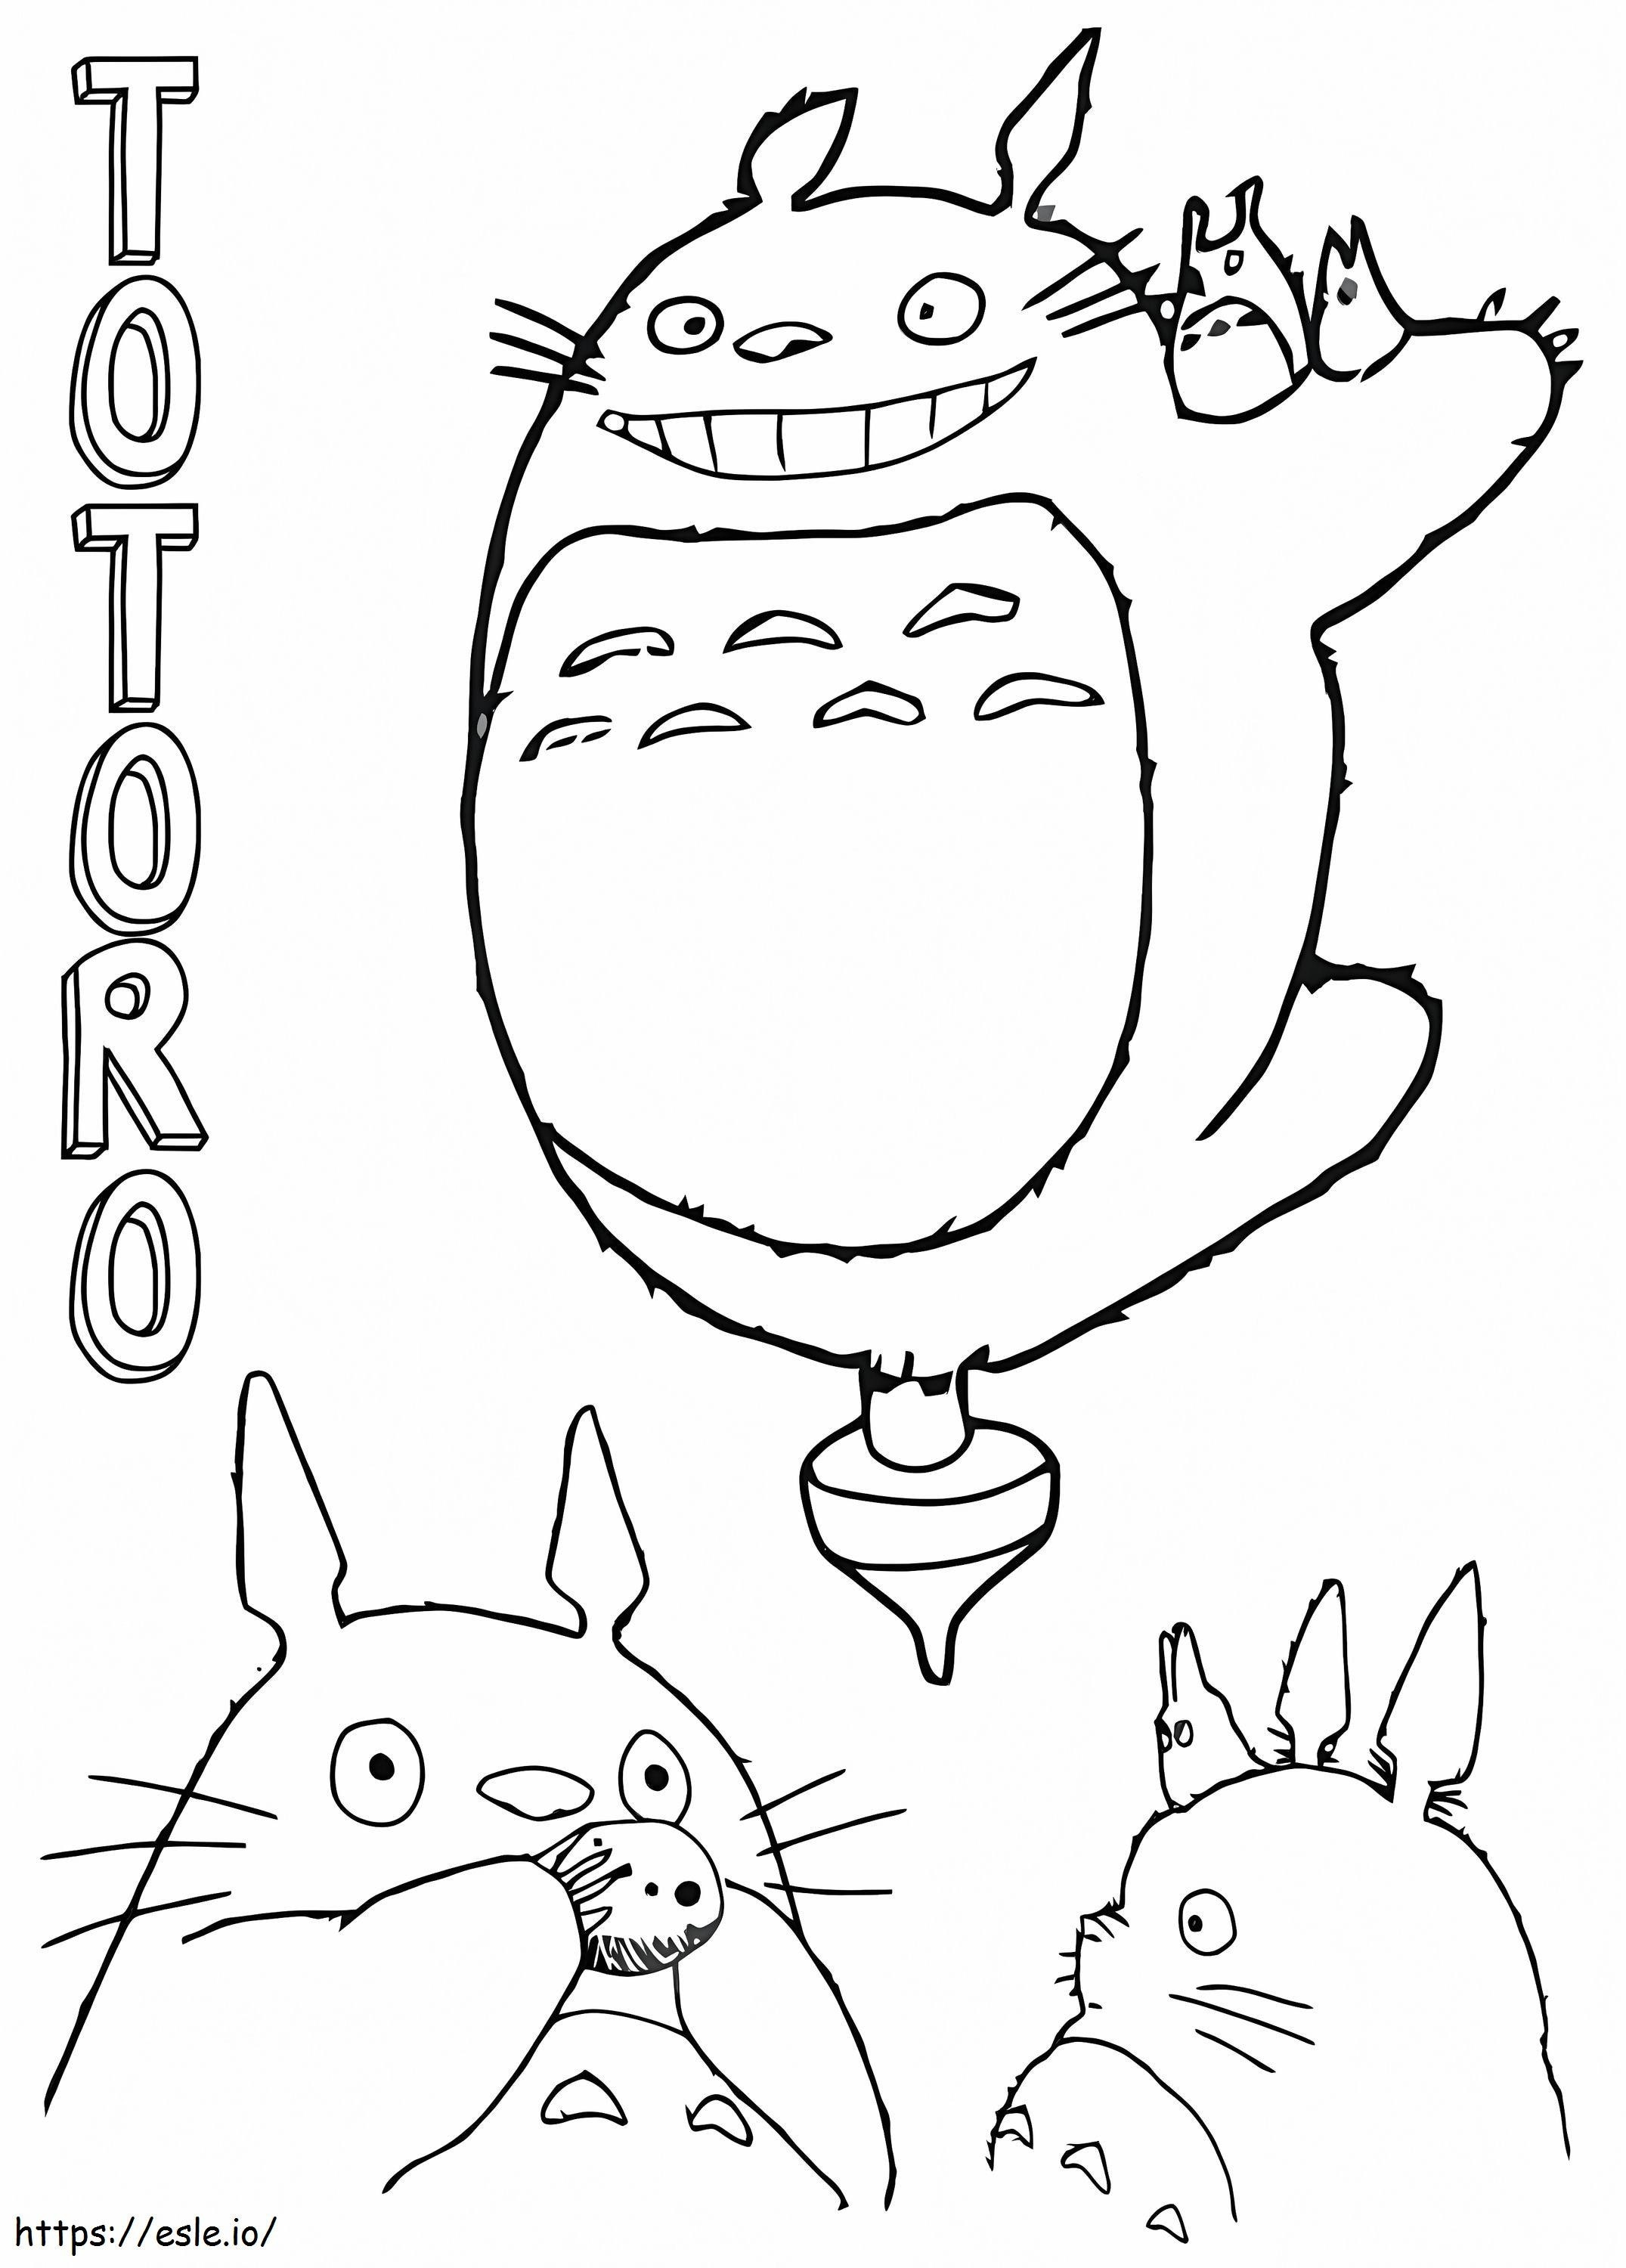 Friendly Totoro Fun coloring page